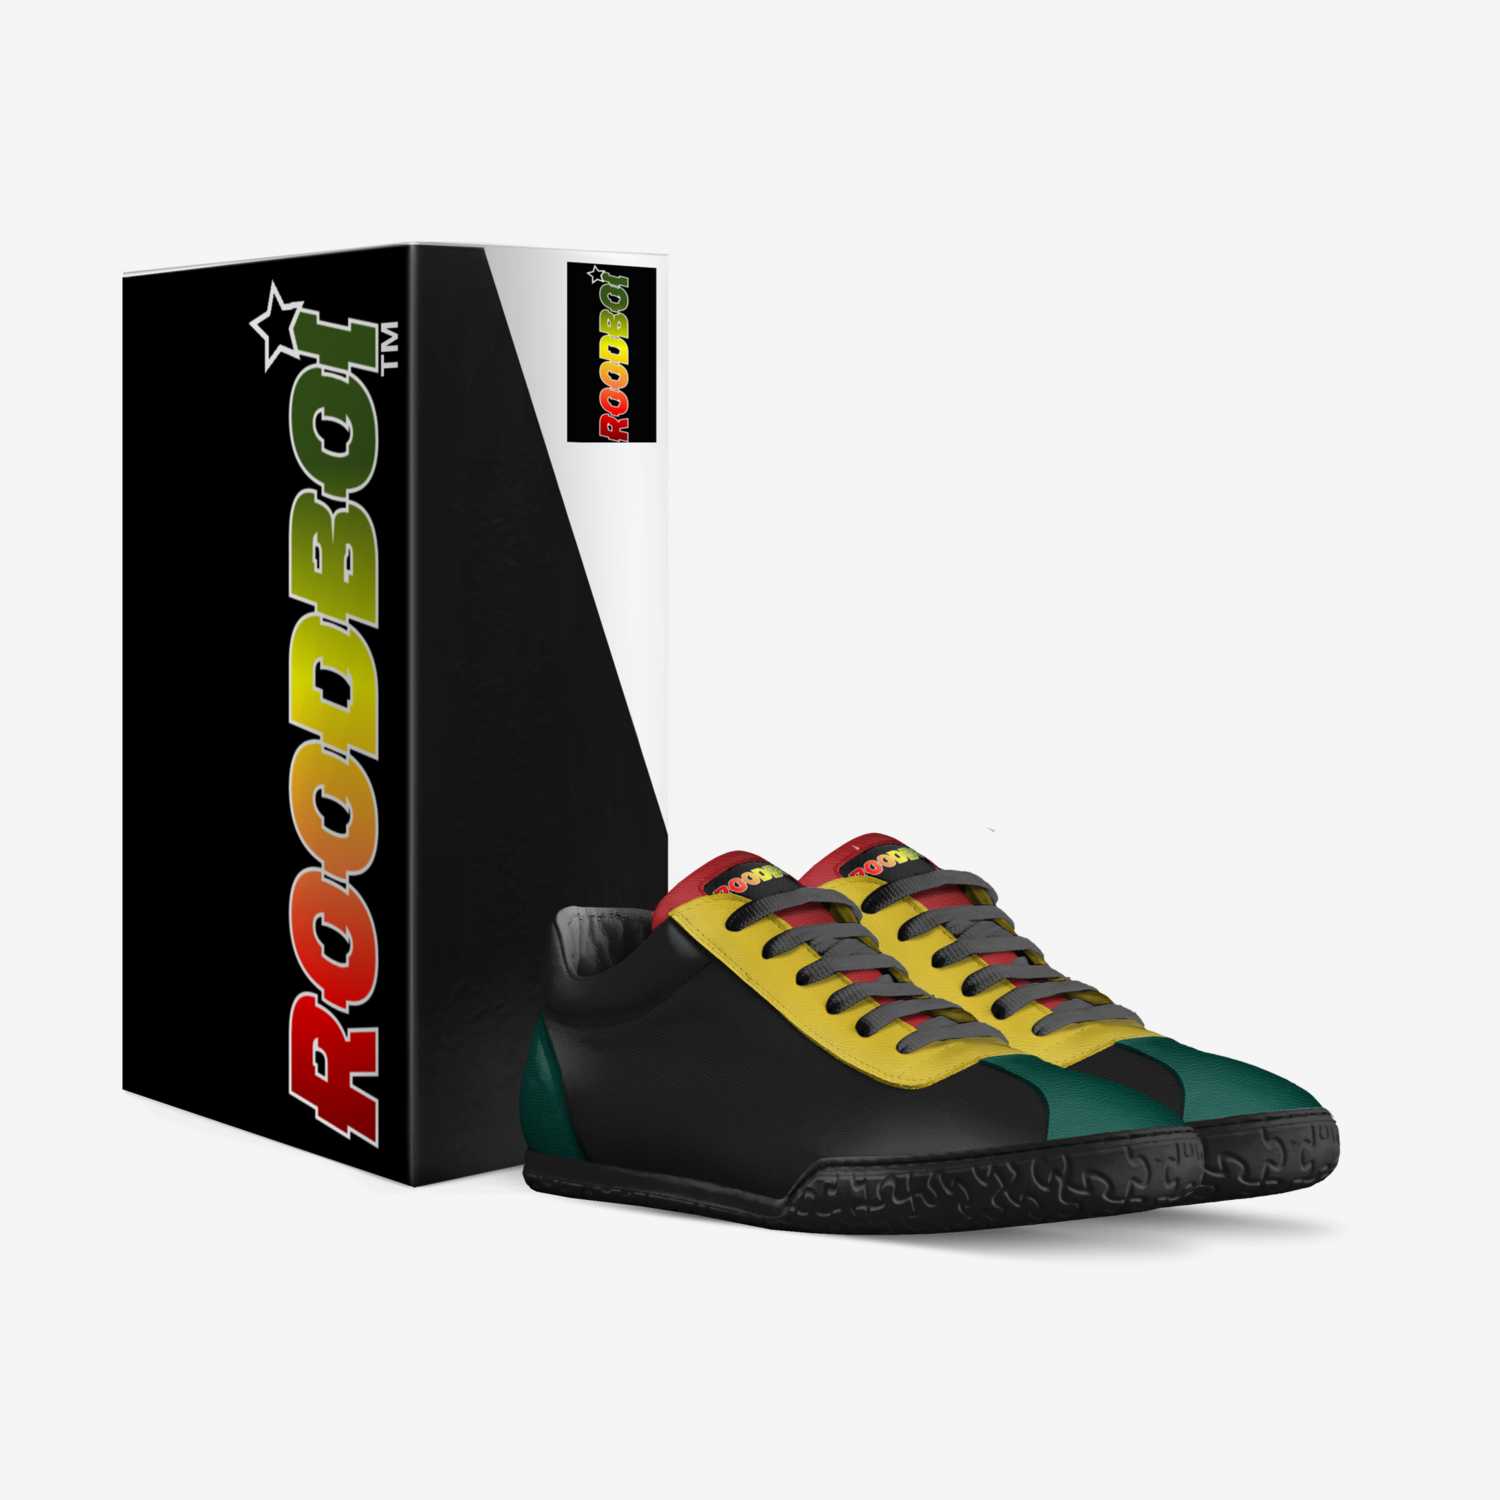 ROODBOI STULLA custom made in Italy shoes by Shango Don Ragga | Box view